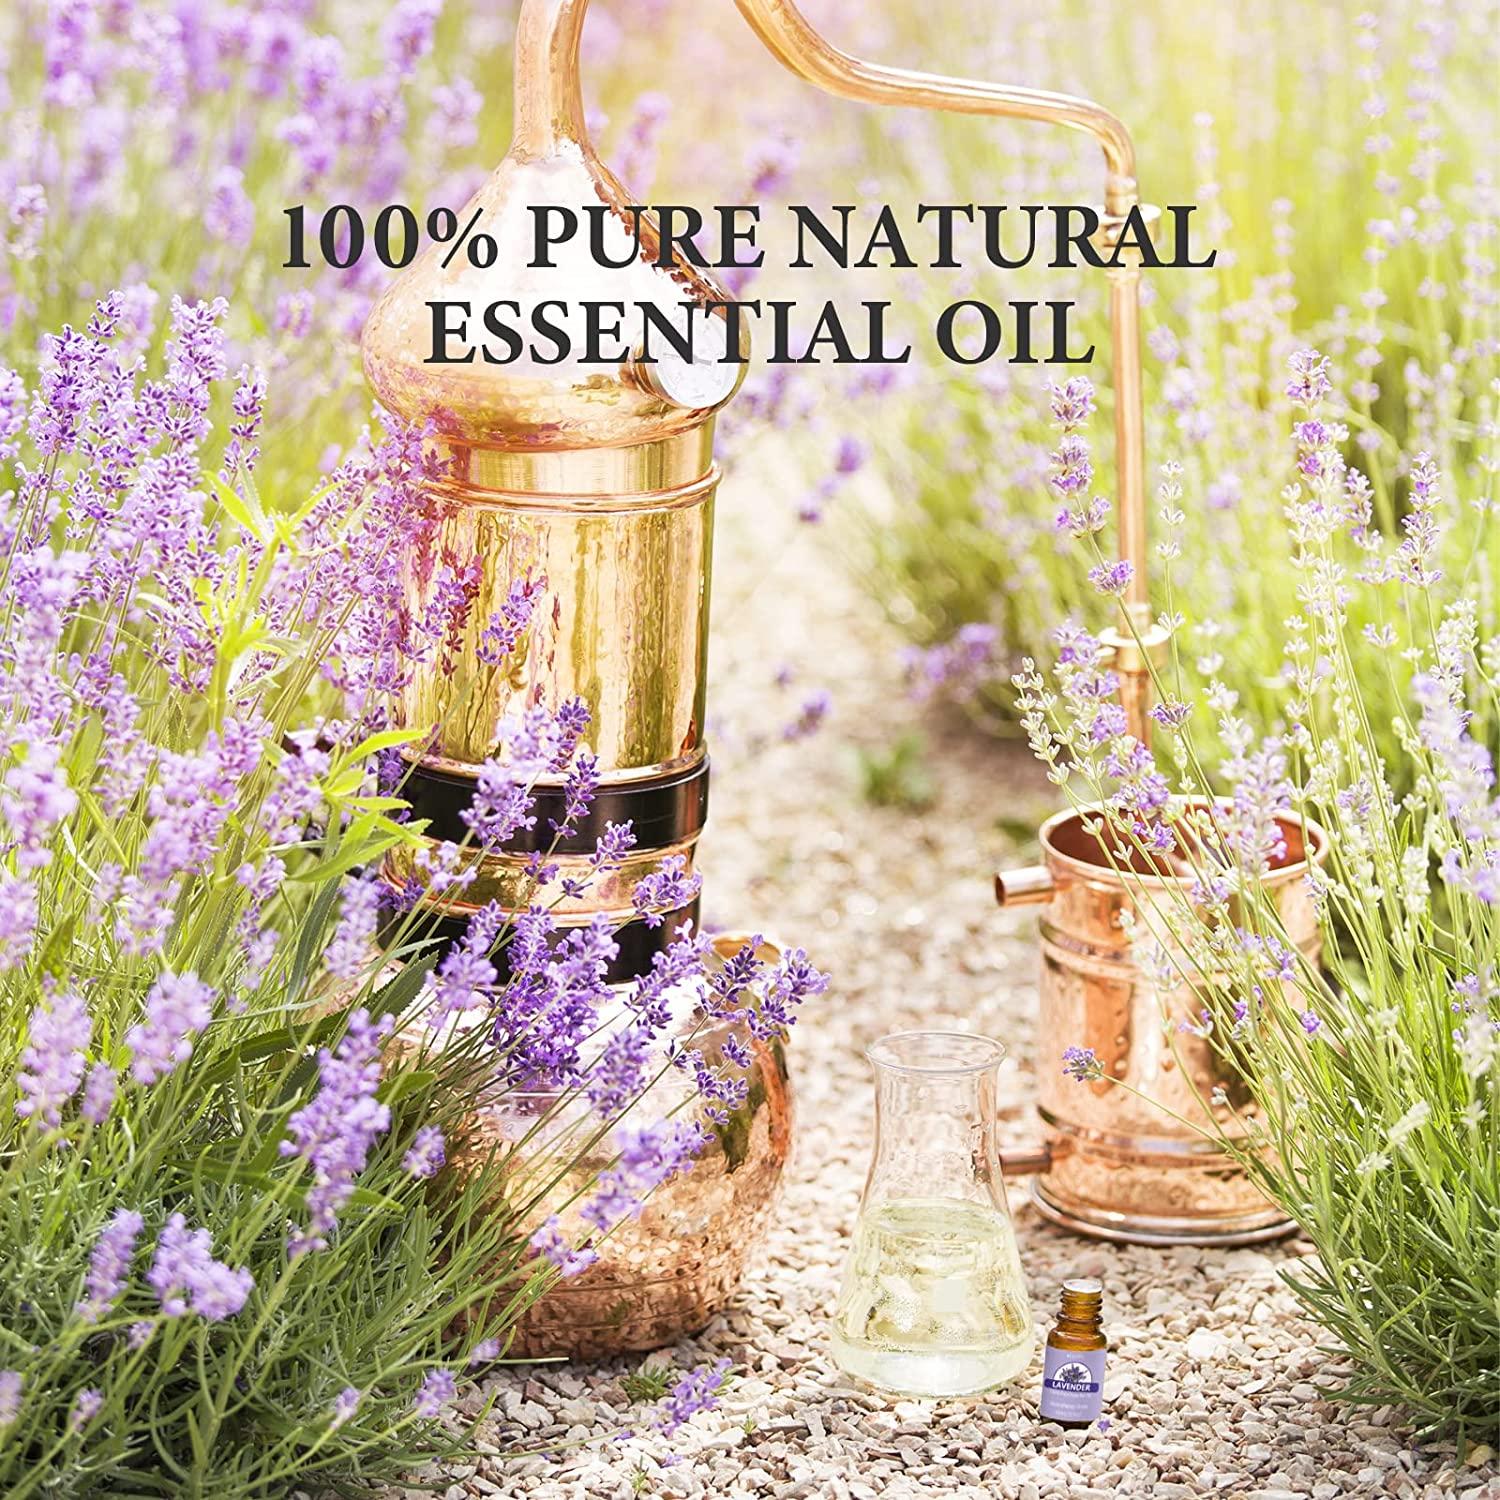 Lavender Essential Oil 6 Set